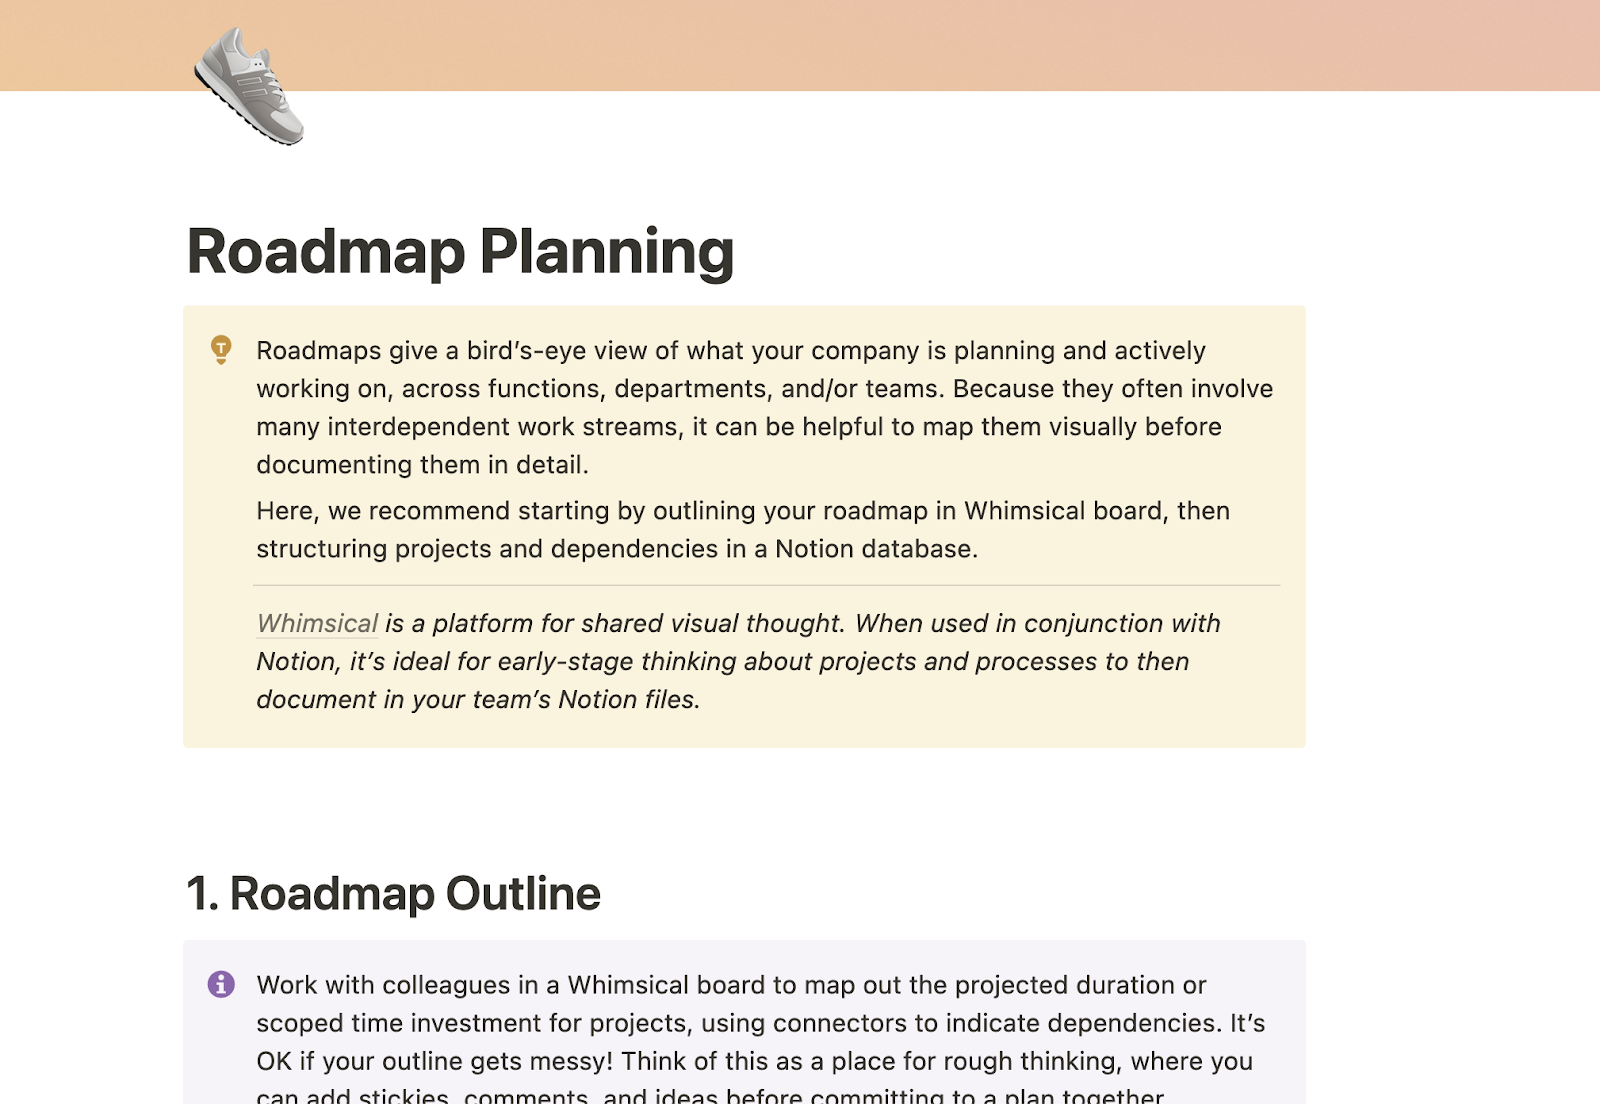 Roadmap planning